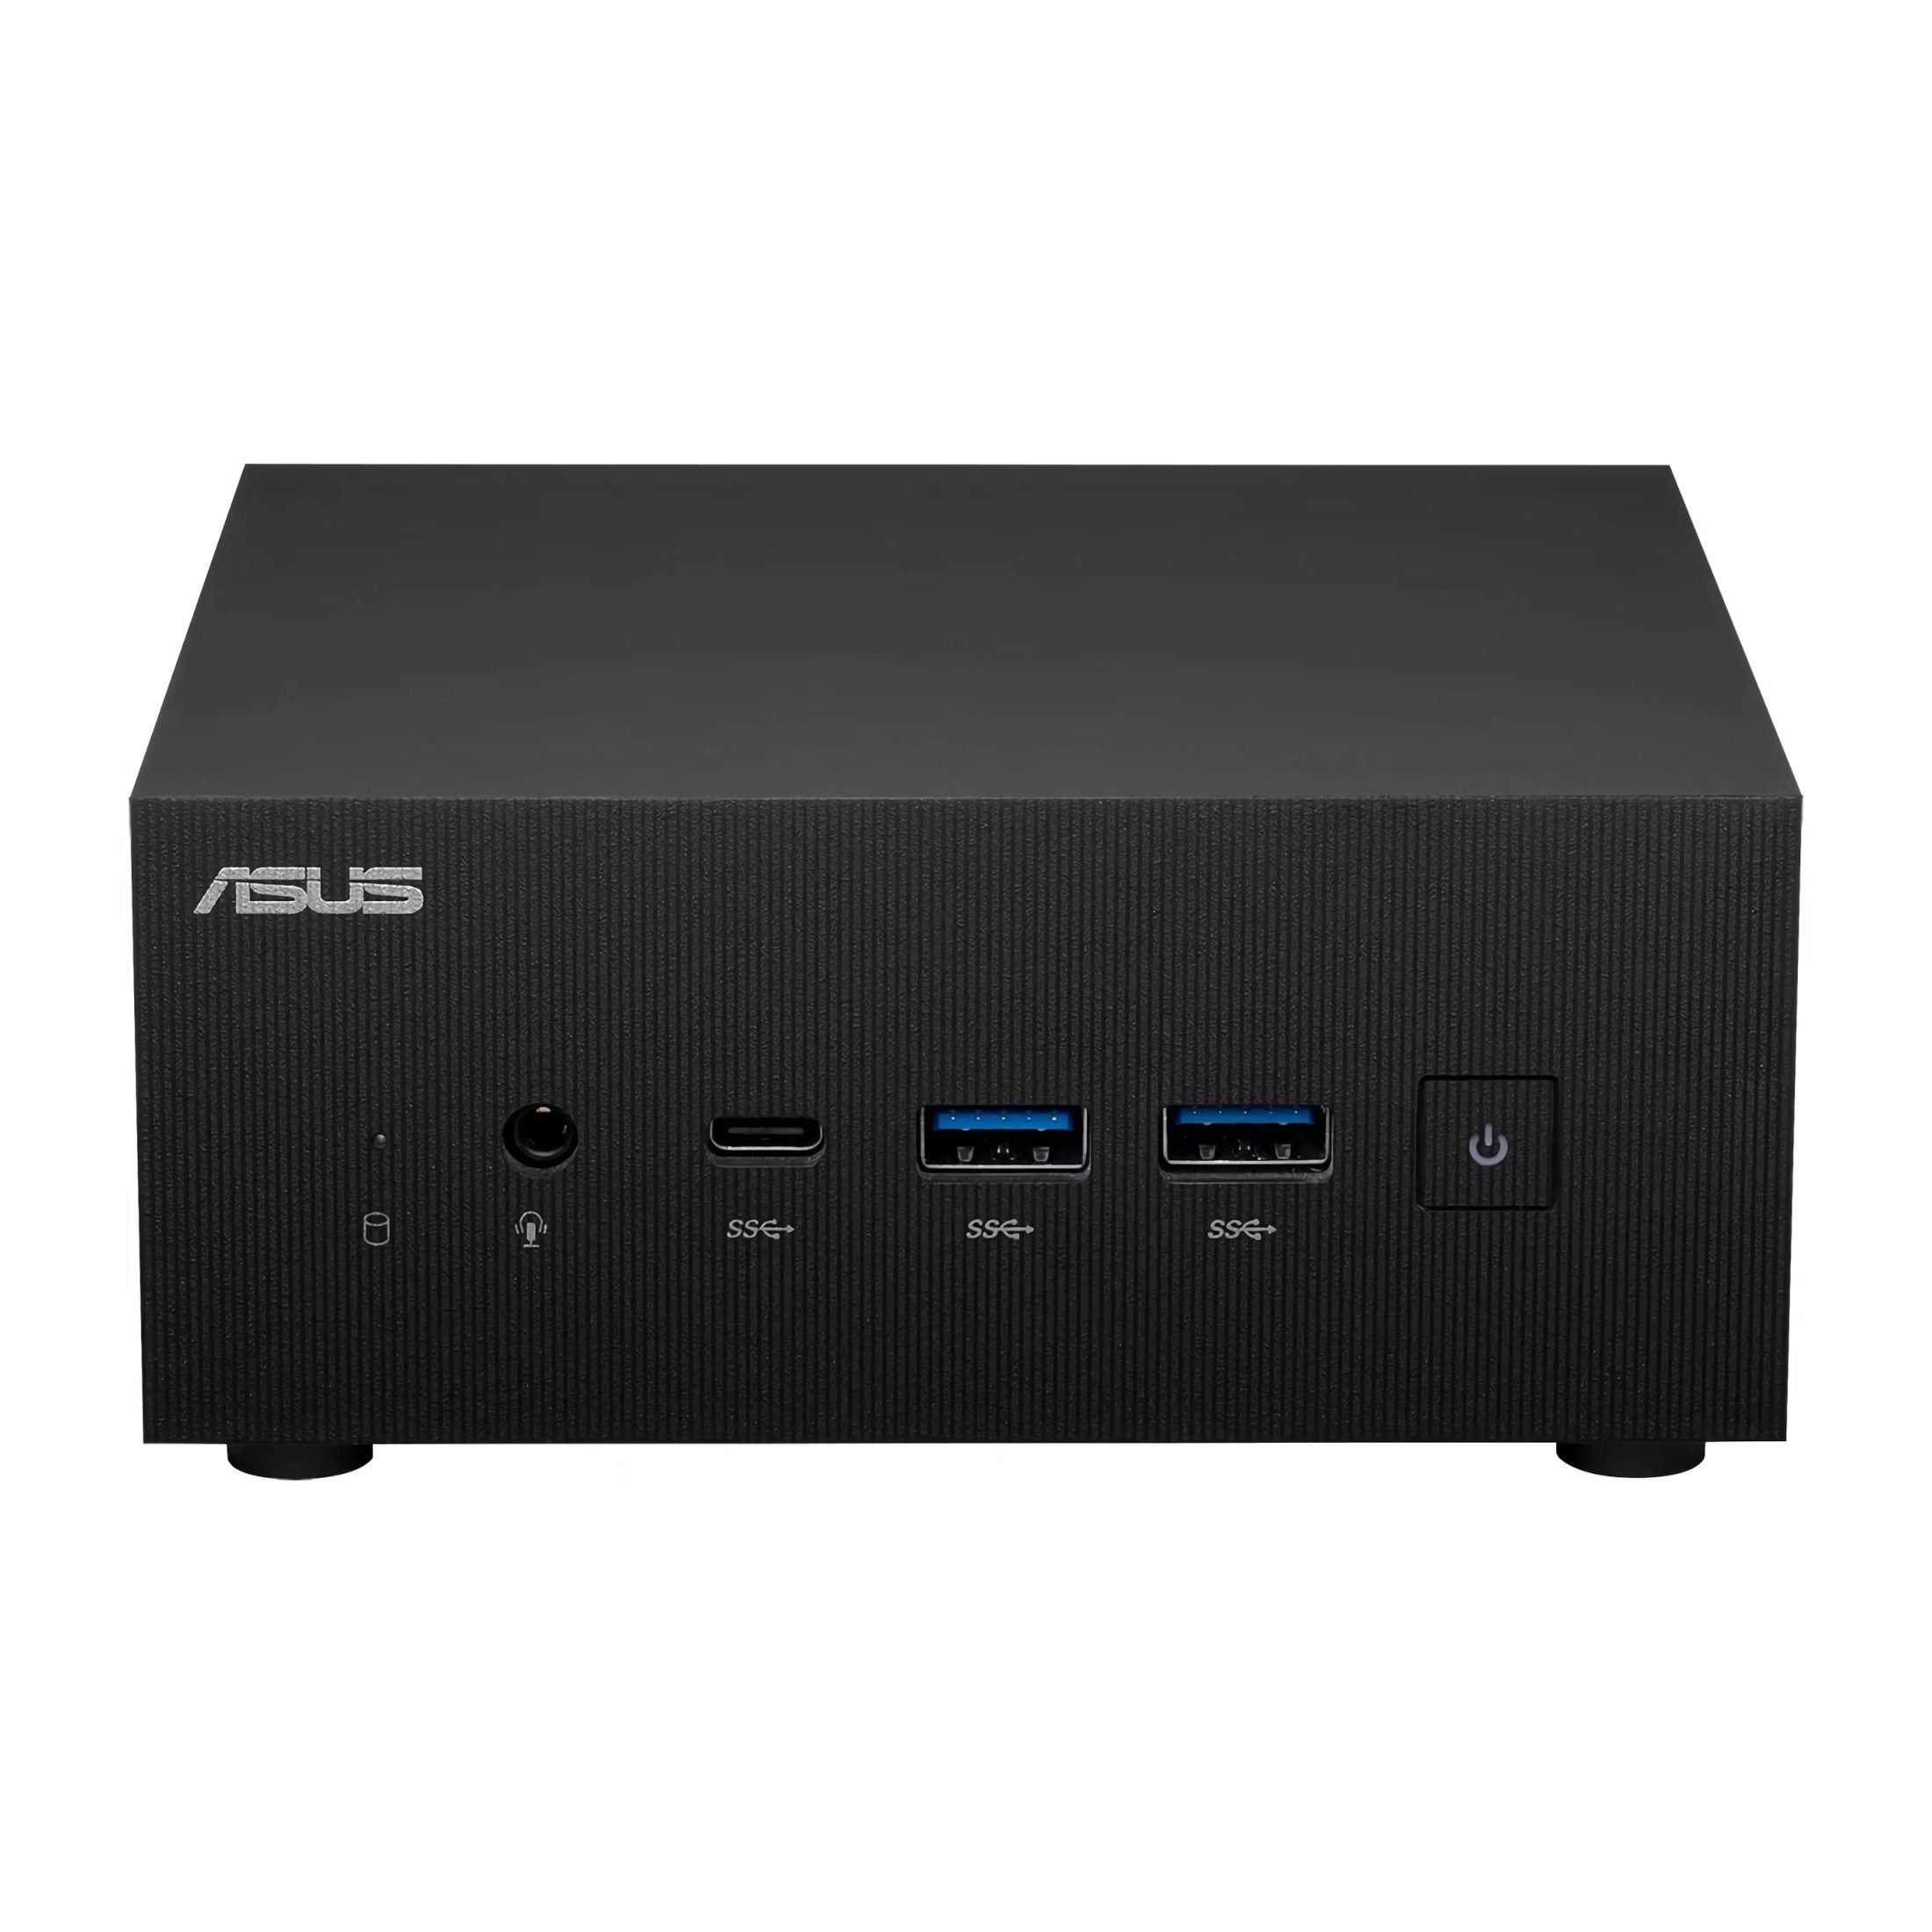 Asus PN52, fertig eingerichteter Mini-PC (AMD Ryzen 7 5800H, Radeon™ Vega 8, 8 GB RAM, 500 GB SSD)